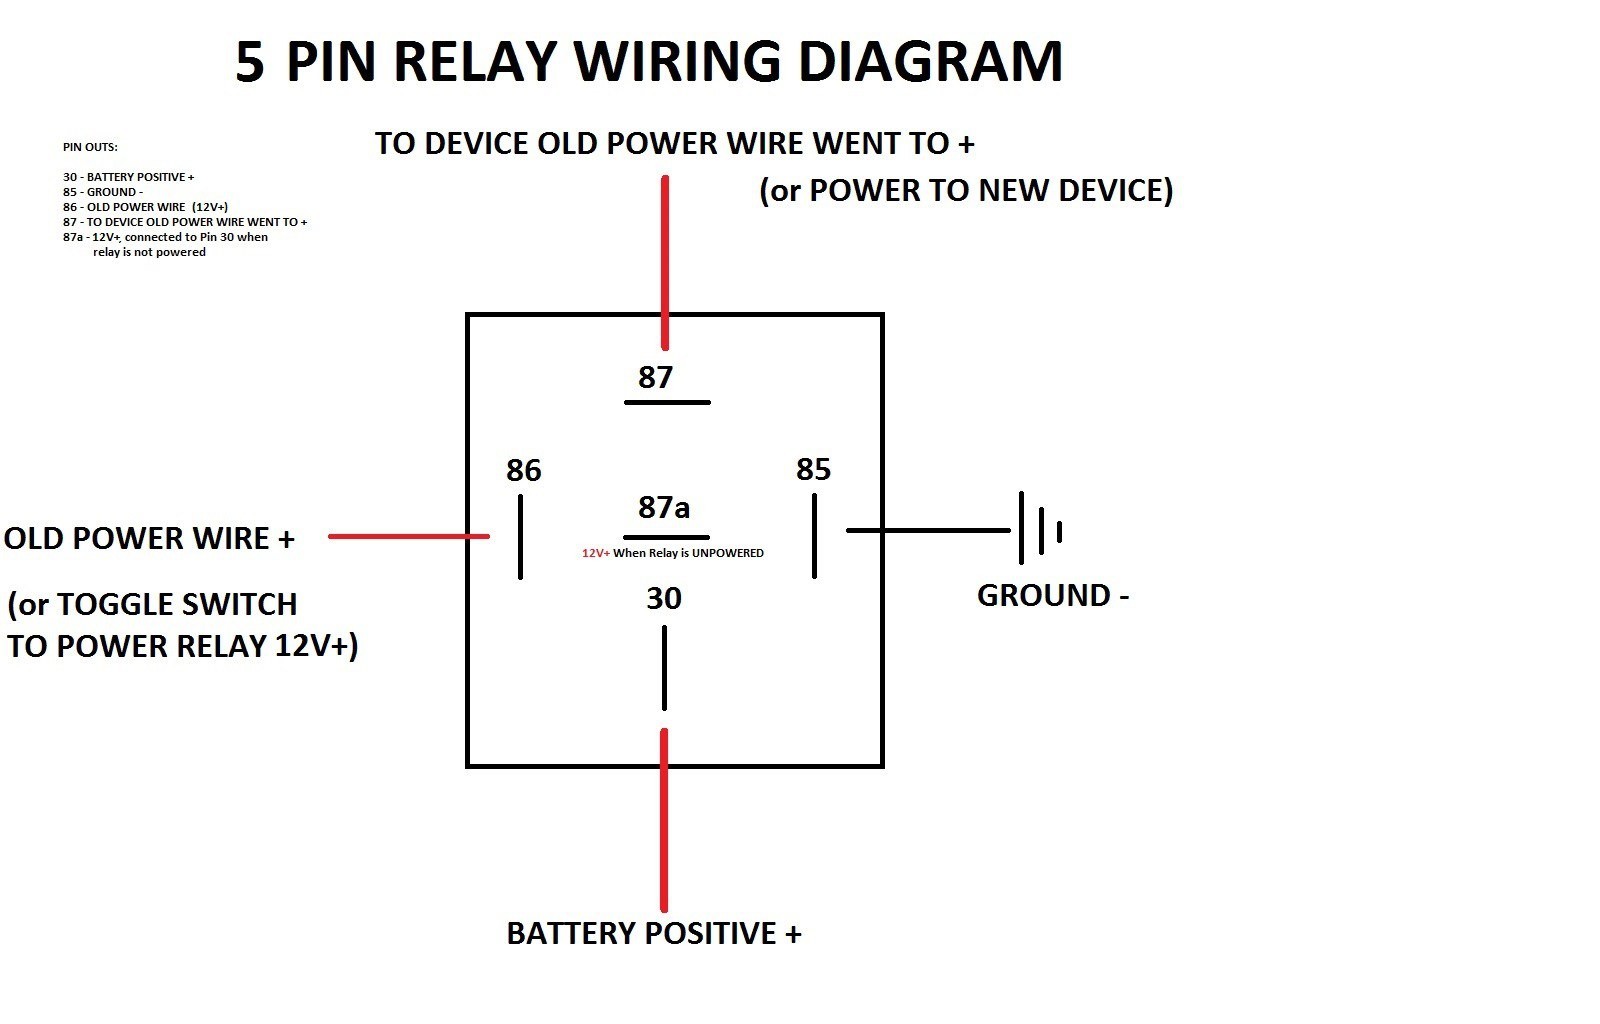 5 Pin Relay Wiring Diagram Unique Bosch 12v Relay Wiring Diagram Hd Dump